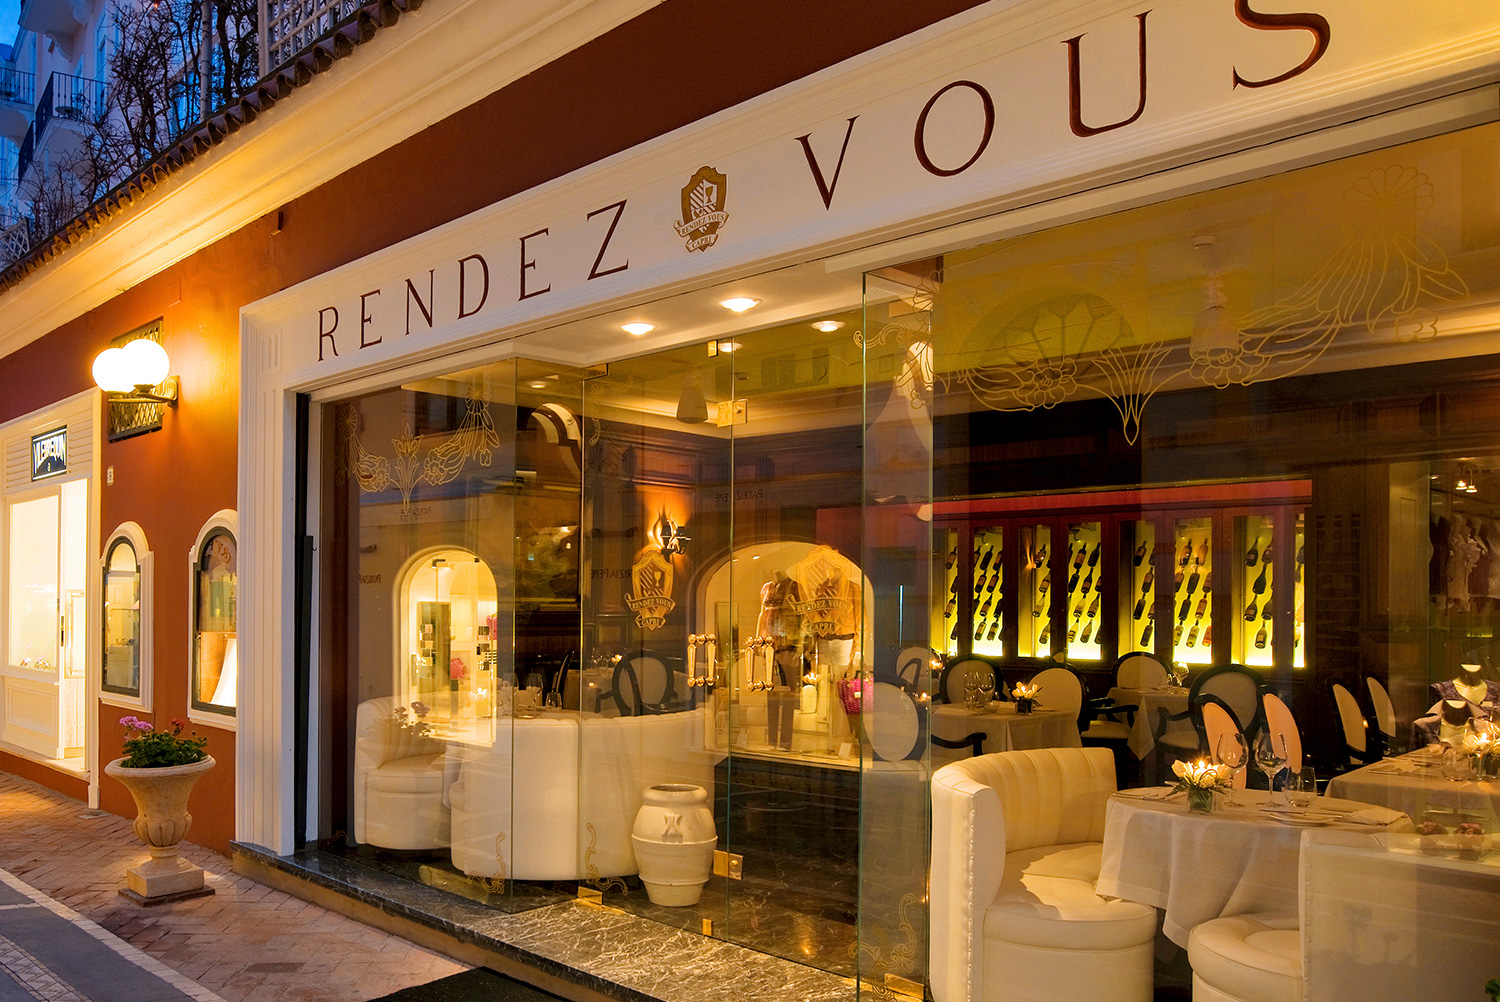 Rendez-Vous restaurant (at the Grand Hotel Quisisana)